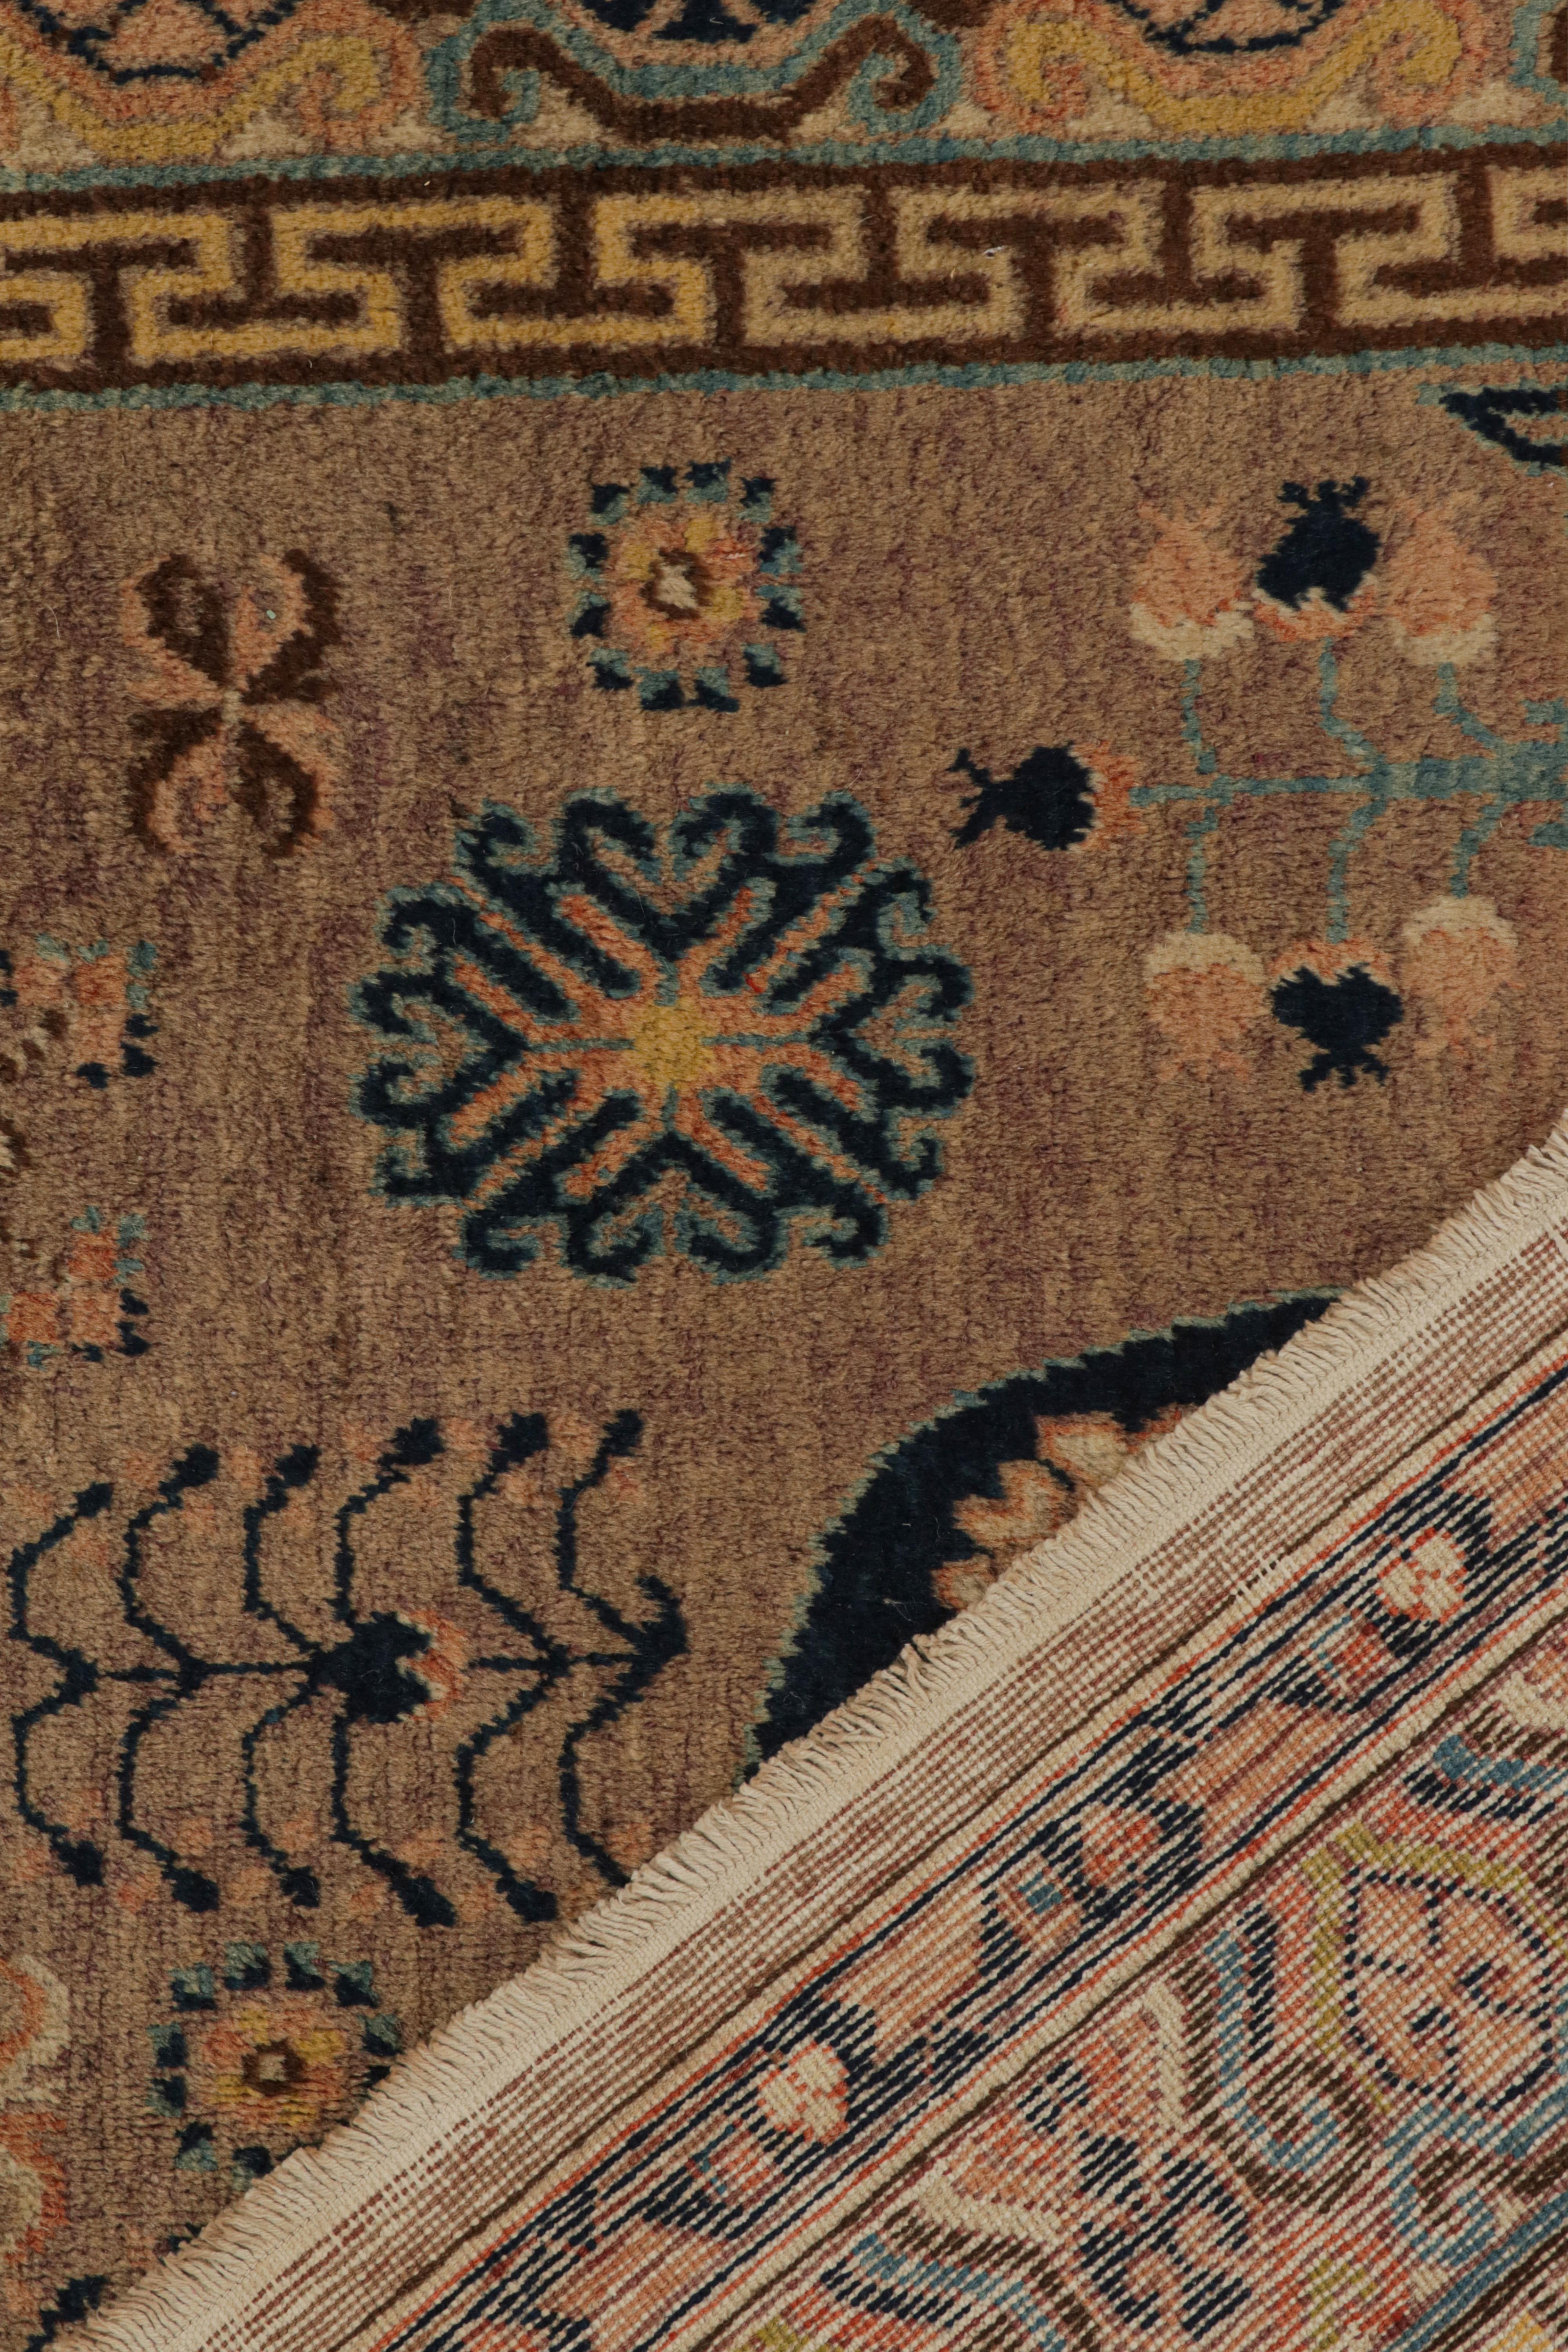 Wool Antique Khotan rug in Beige-Brown, Blue & Gold Medallions, from Rug & Kilim For Sale